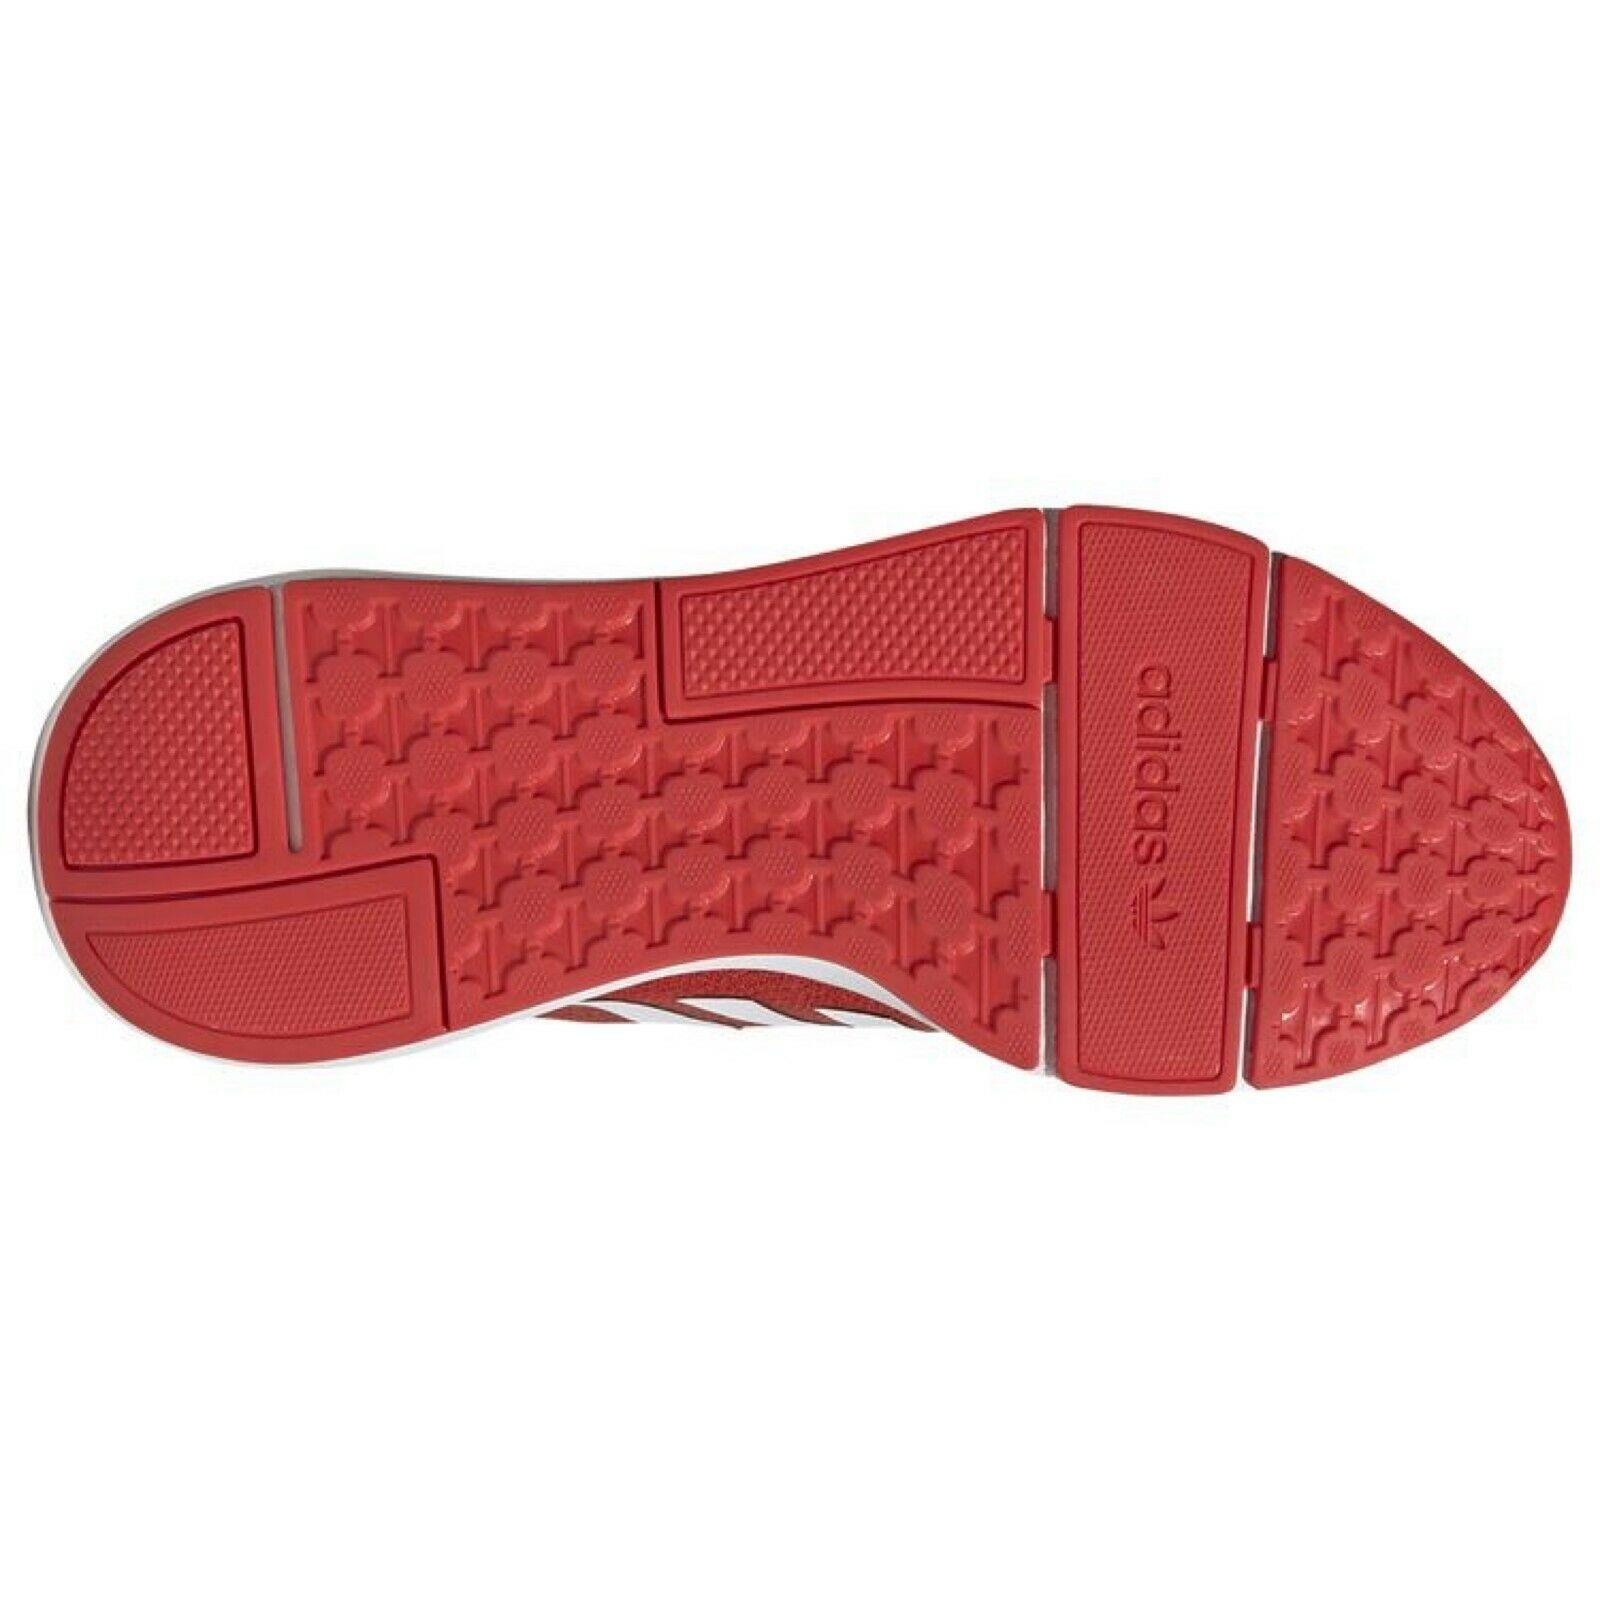 Adidas shoes Originals Swift Run - Red , Red/Black Manufacturer 4